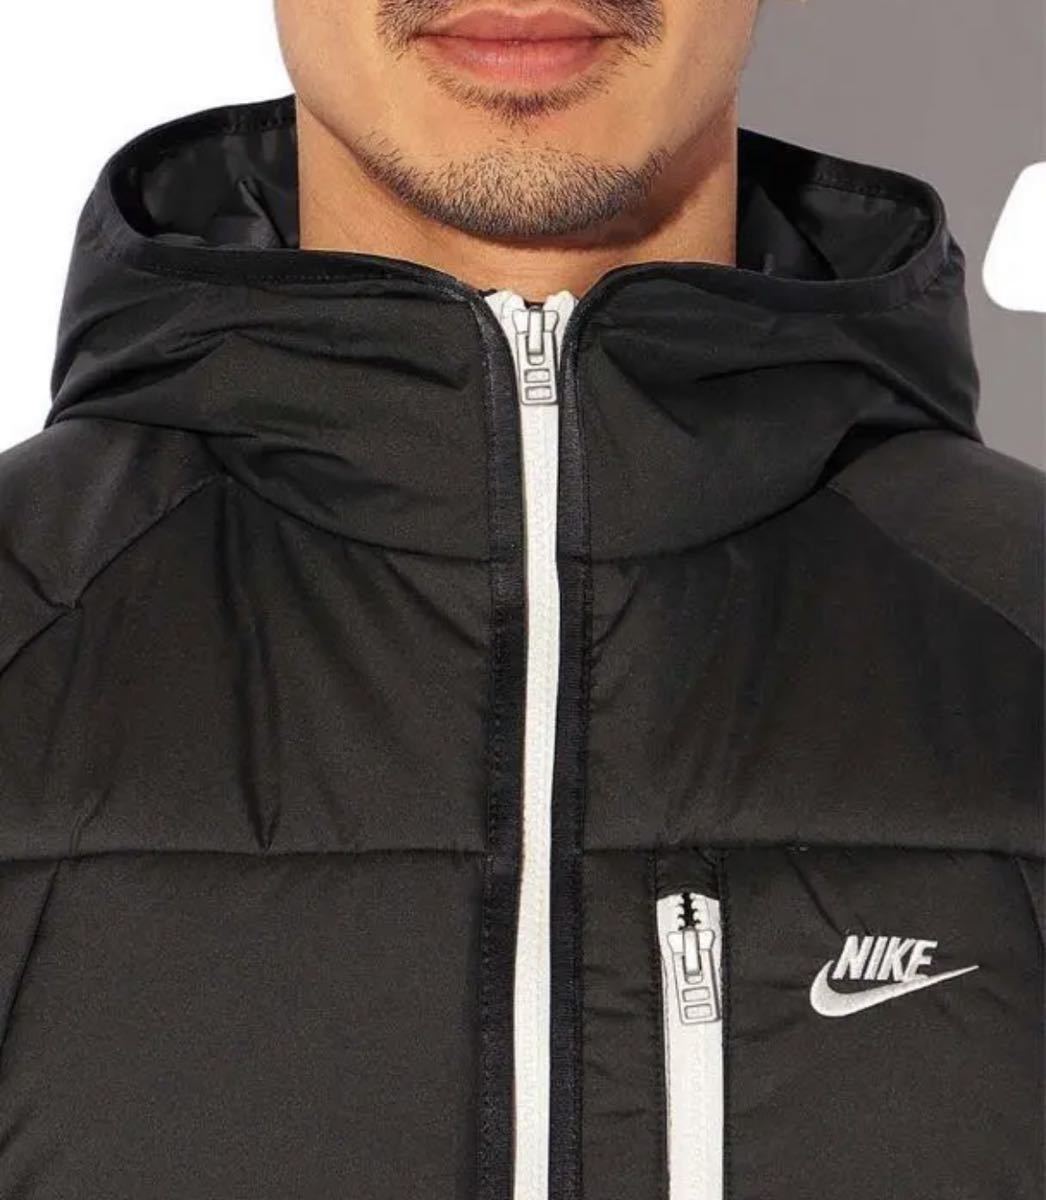 【XL】新品 ナイキ メンズ NIKE NSW TF RPL レガシー 中綿ジャケット コート 中綿 黒 定価17600円 ブラック ブルゾン